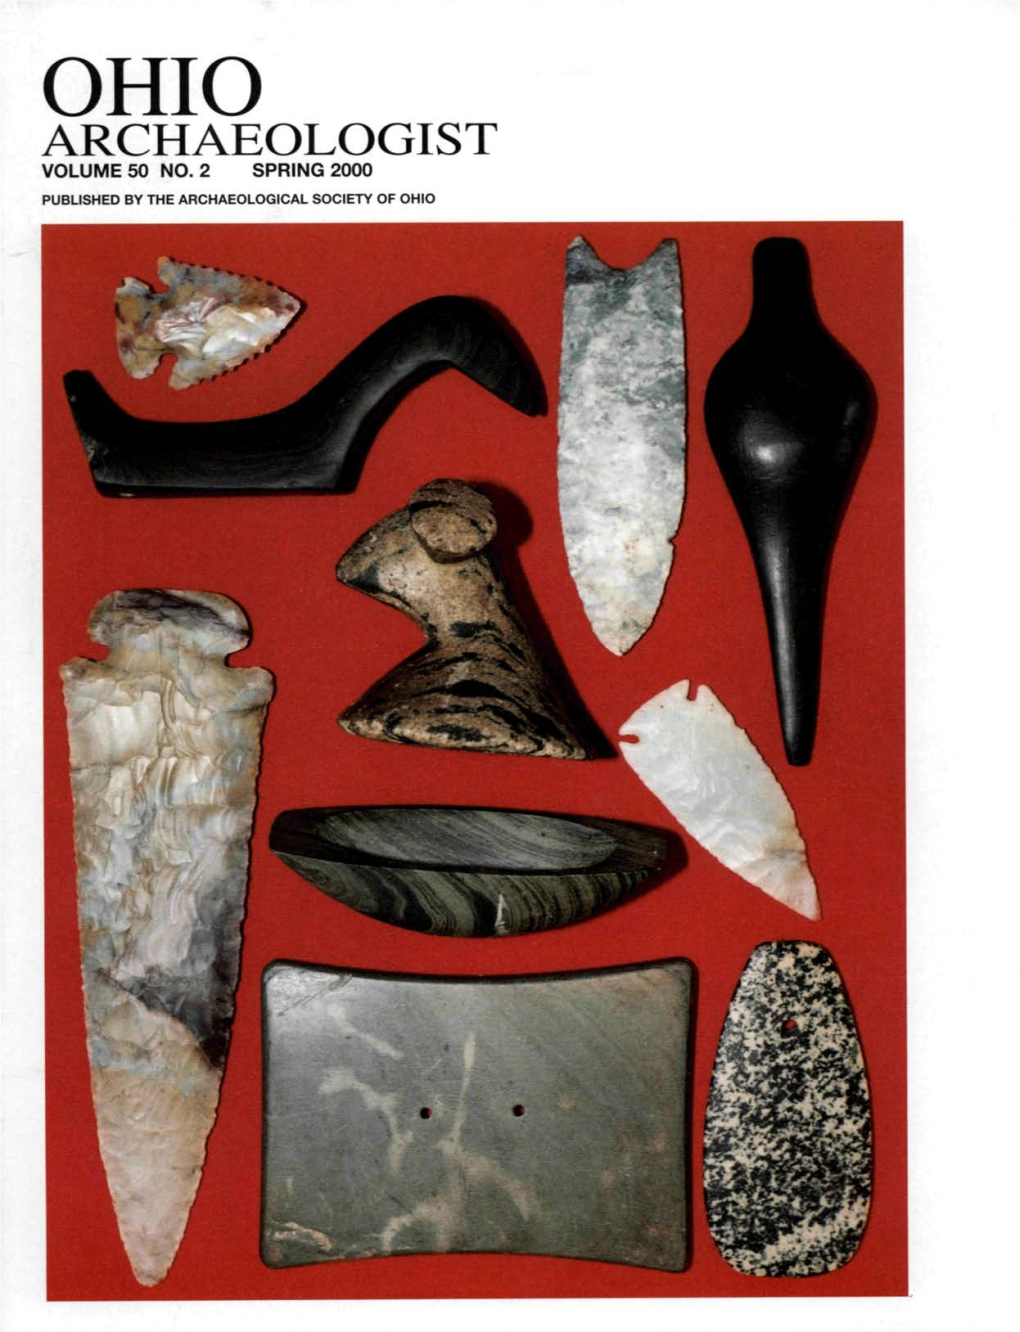 Archaeologist Volume 50 No